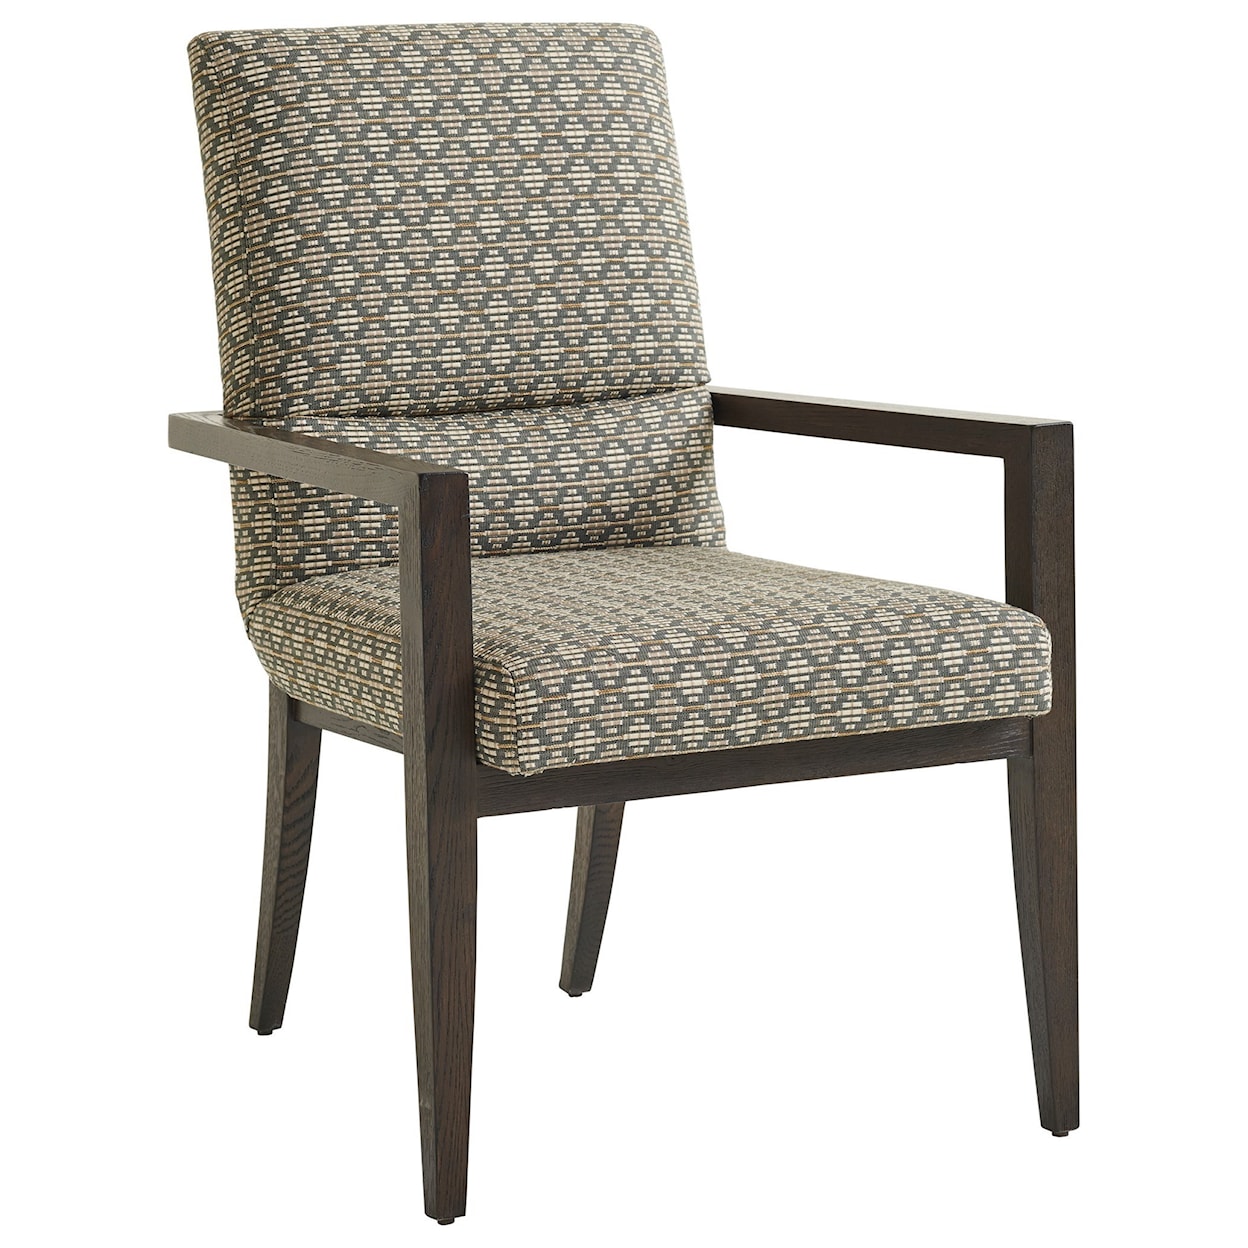 Barclay Butera Park City Glenwild Customizable Upholstered Arm Chair